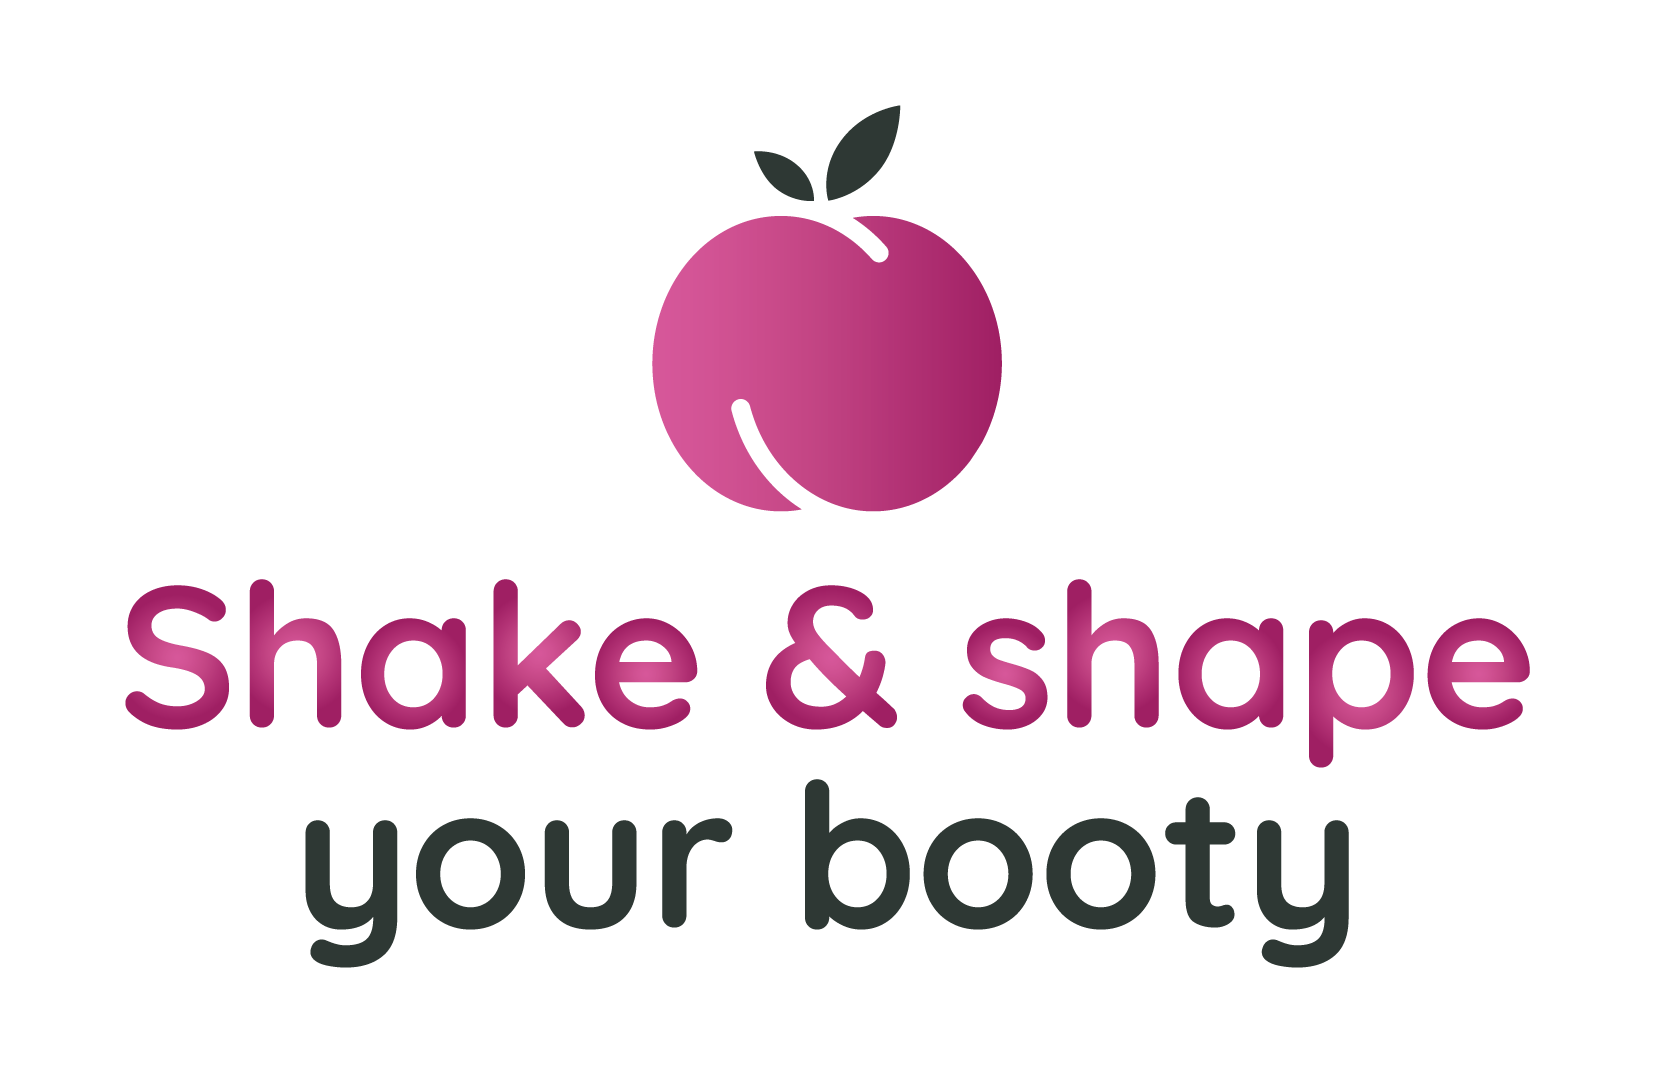 [DOGODEK] Shake&Shape Your Booty event v Ljubljani